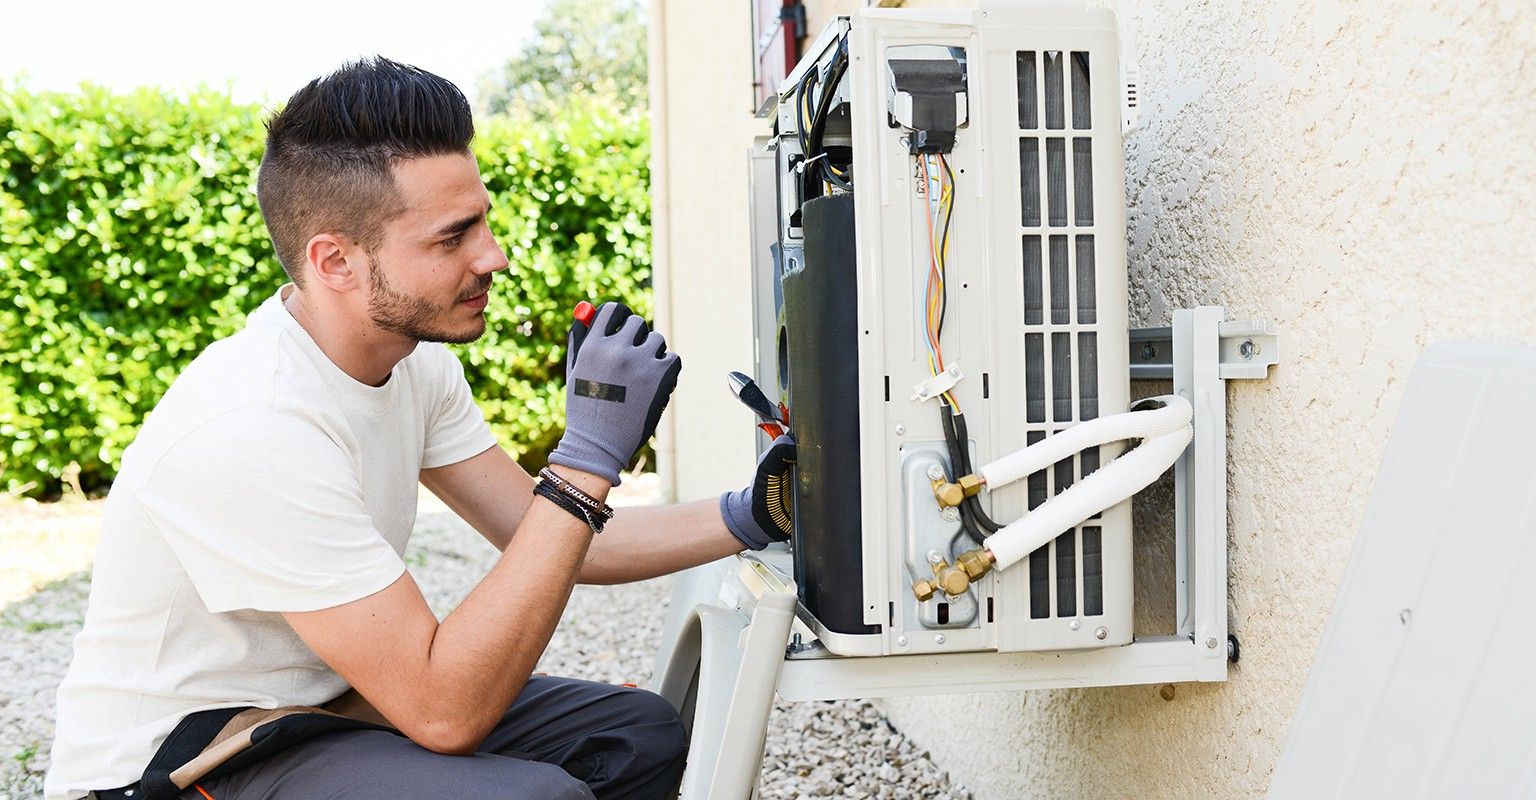 The 10 Best Window Air Conditioner Repair Services in Baton Rouge, LA